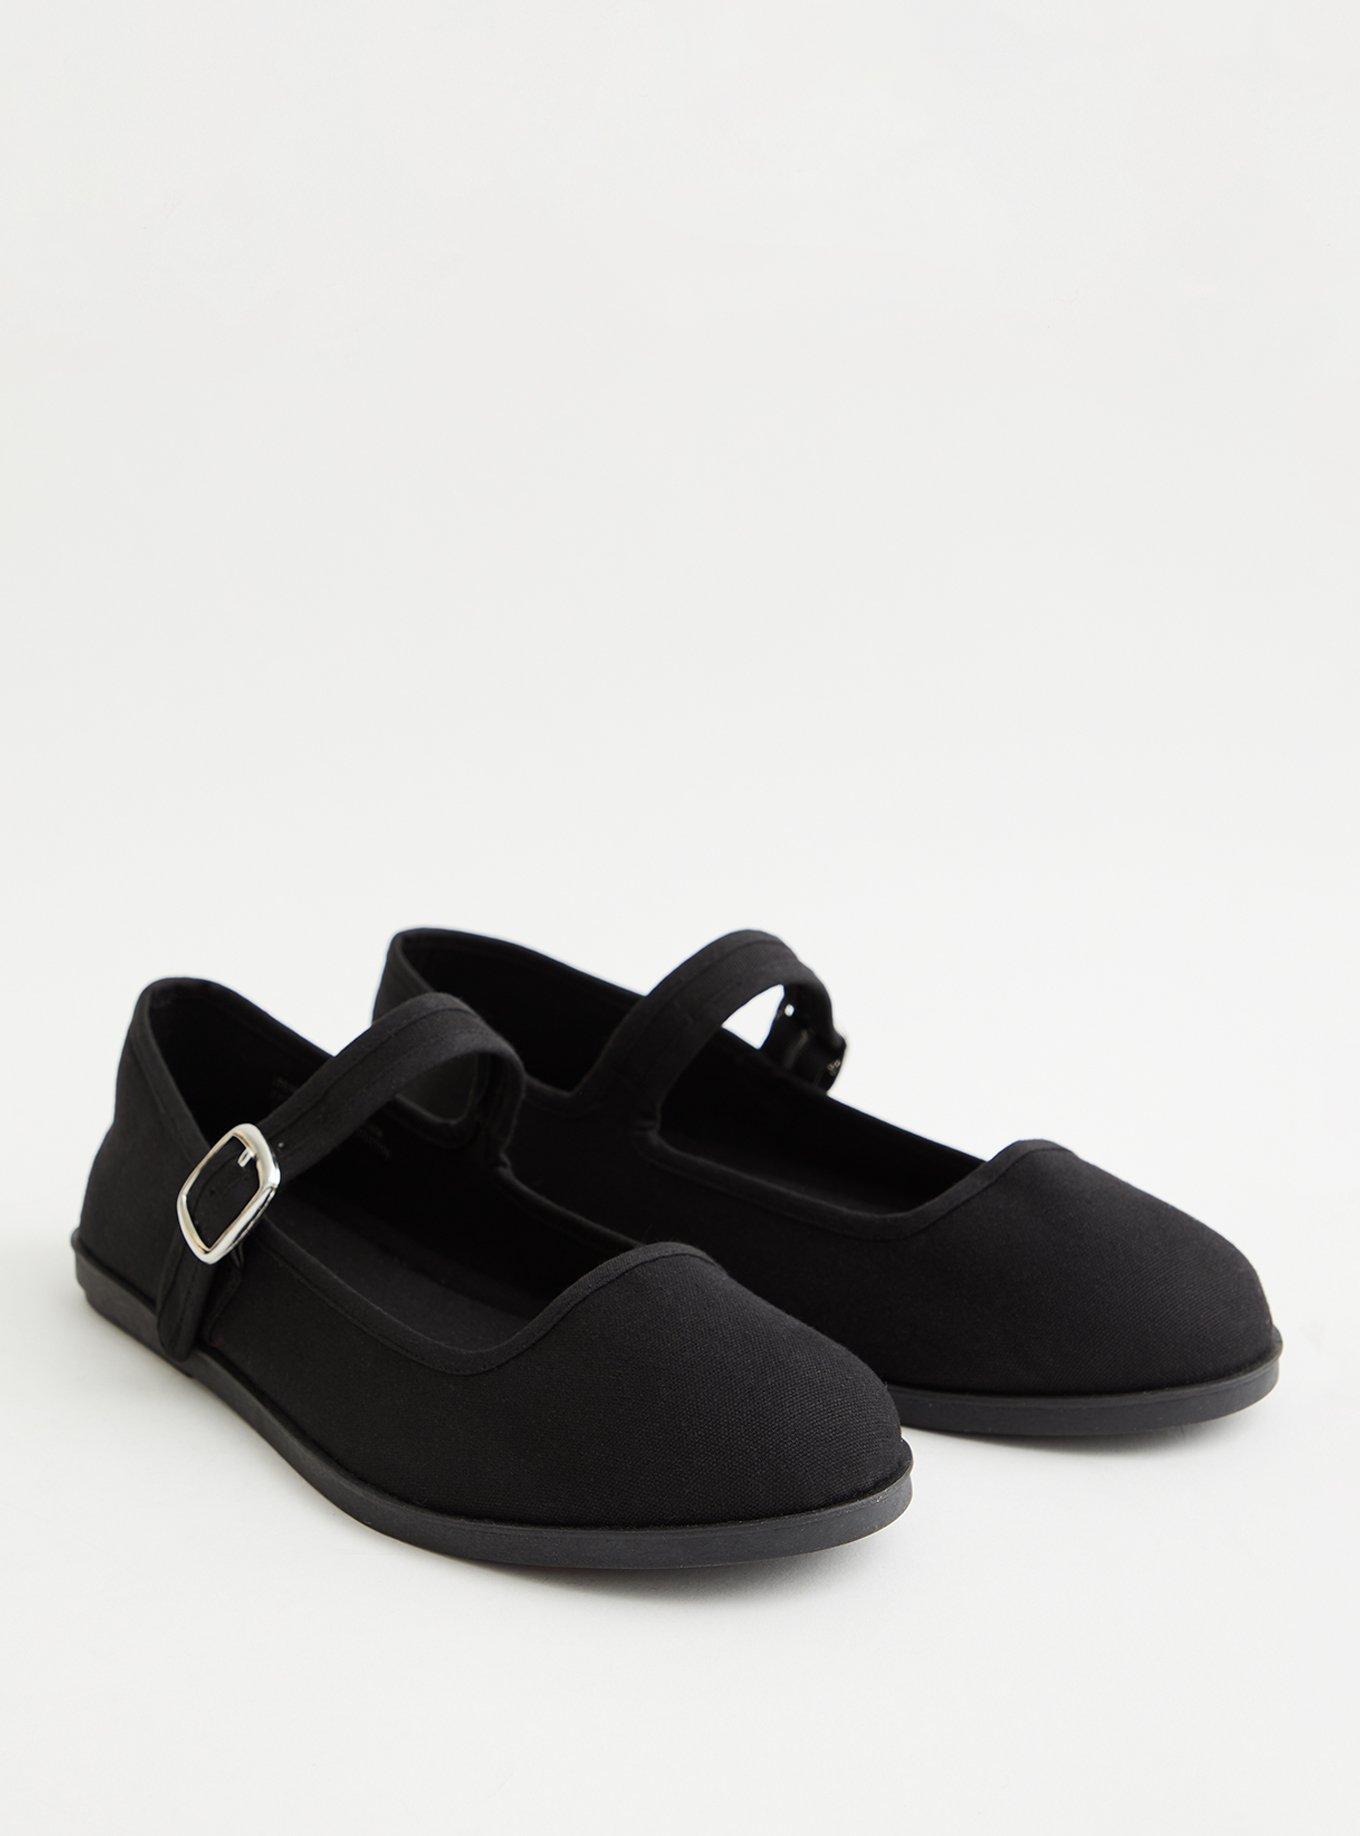 Plus Size - Flat Mary Jane Shoe - Black Canvas (WW) - Torrid